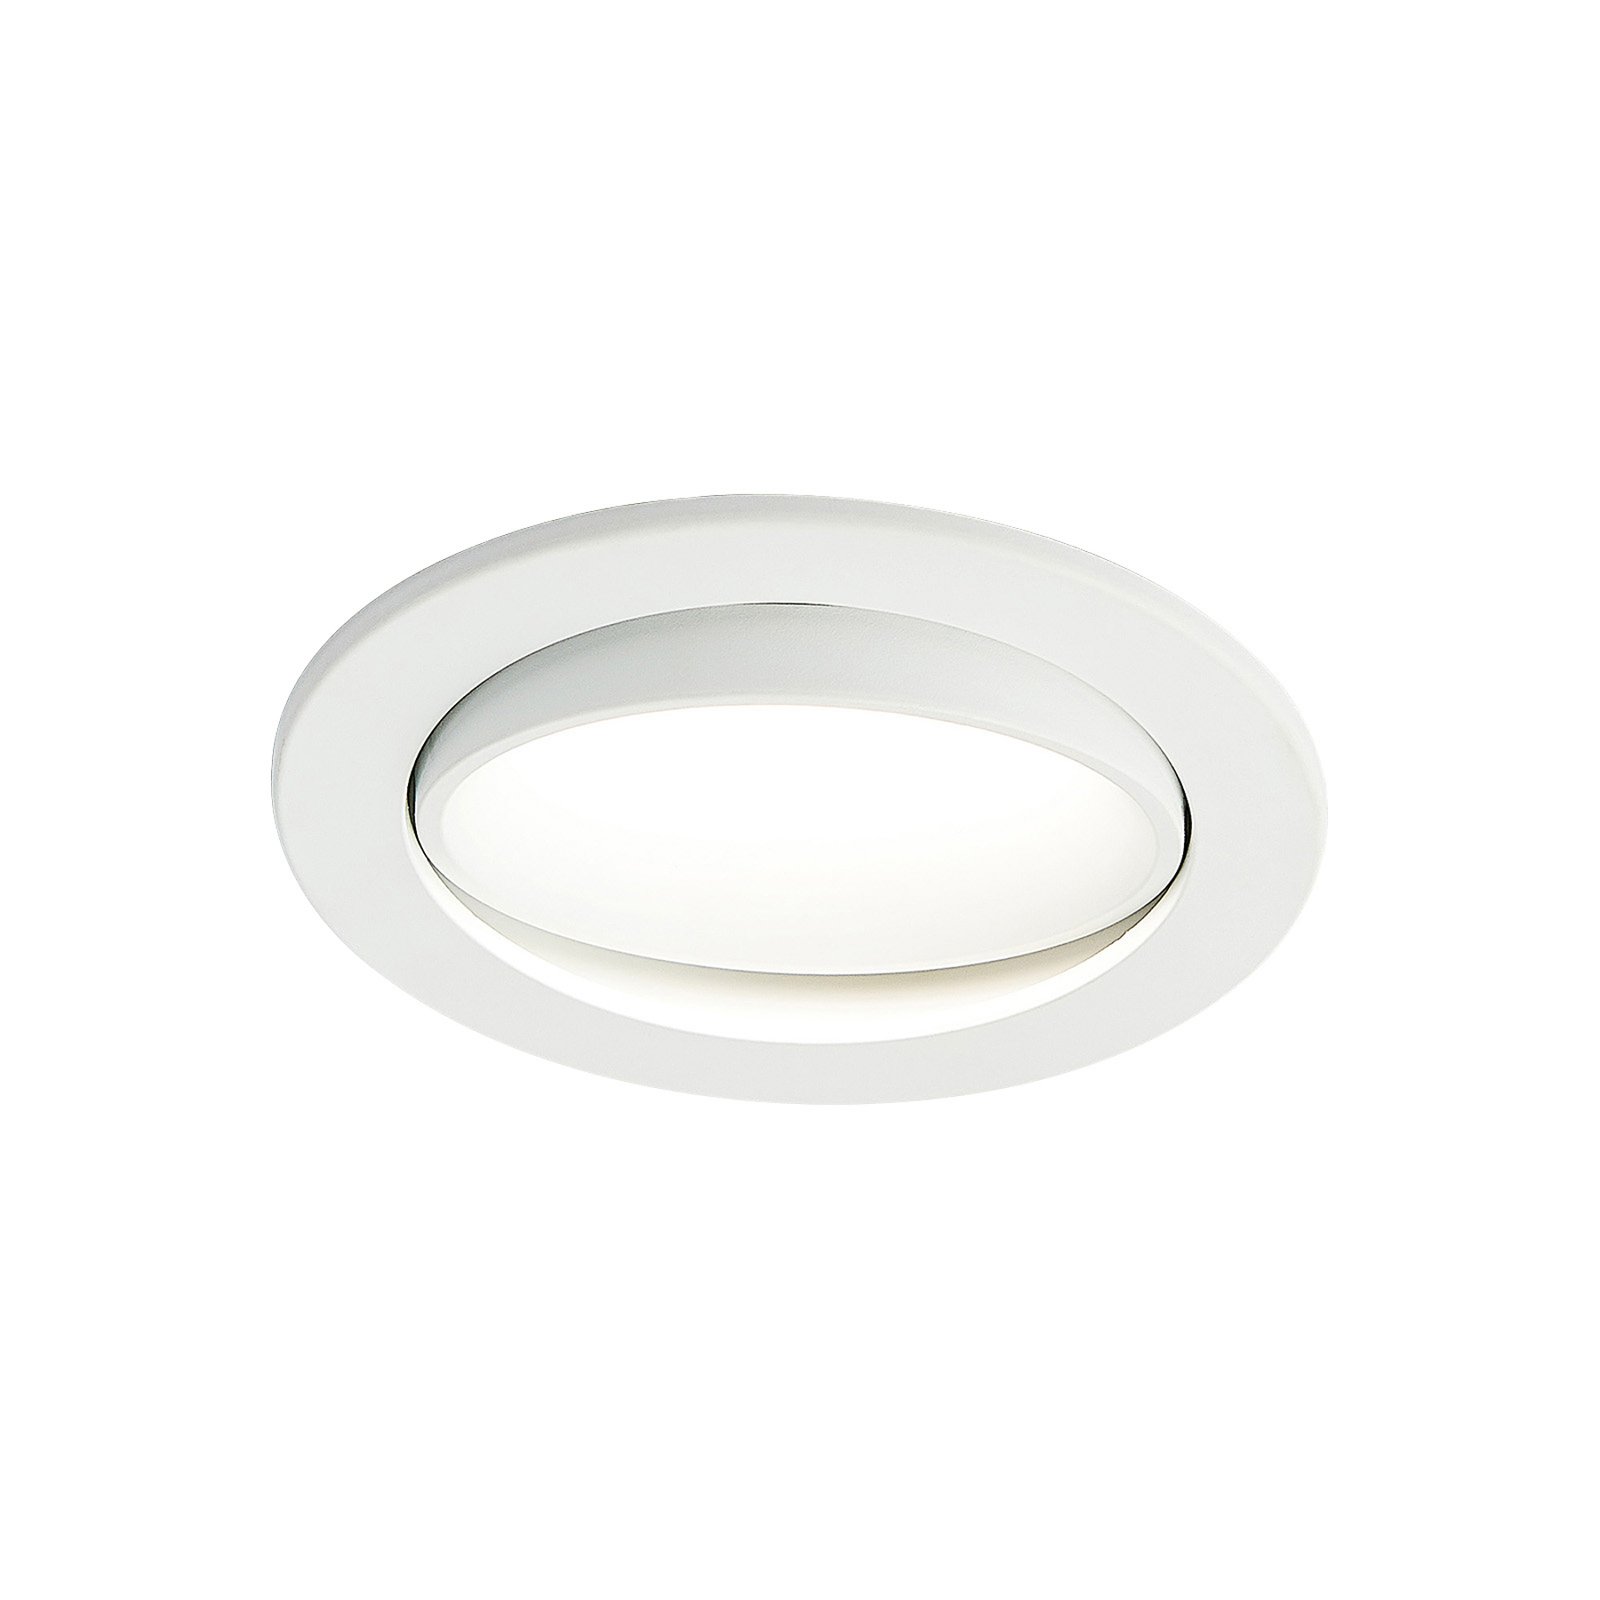 Lámpara empotrable LED Katerin de Arcchio, blanca, orientable, Set de 3